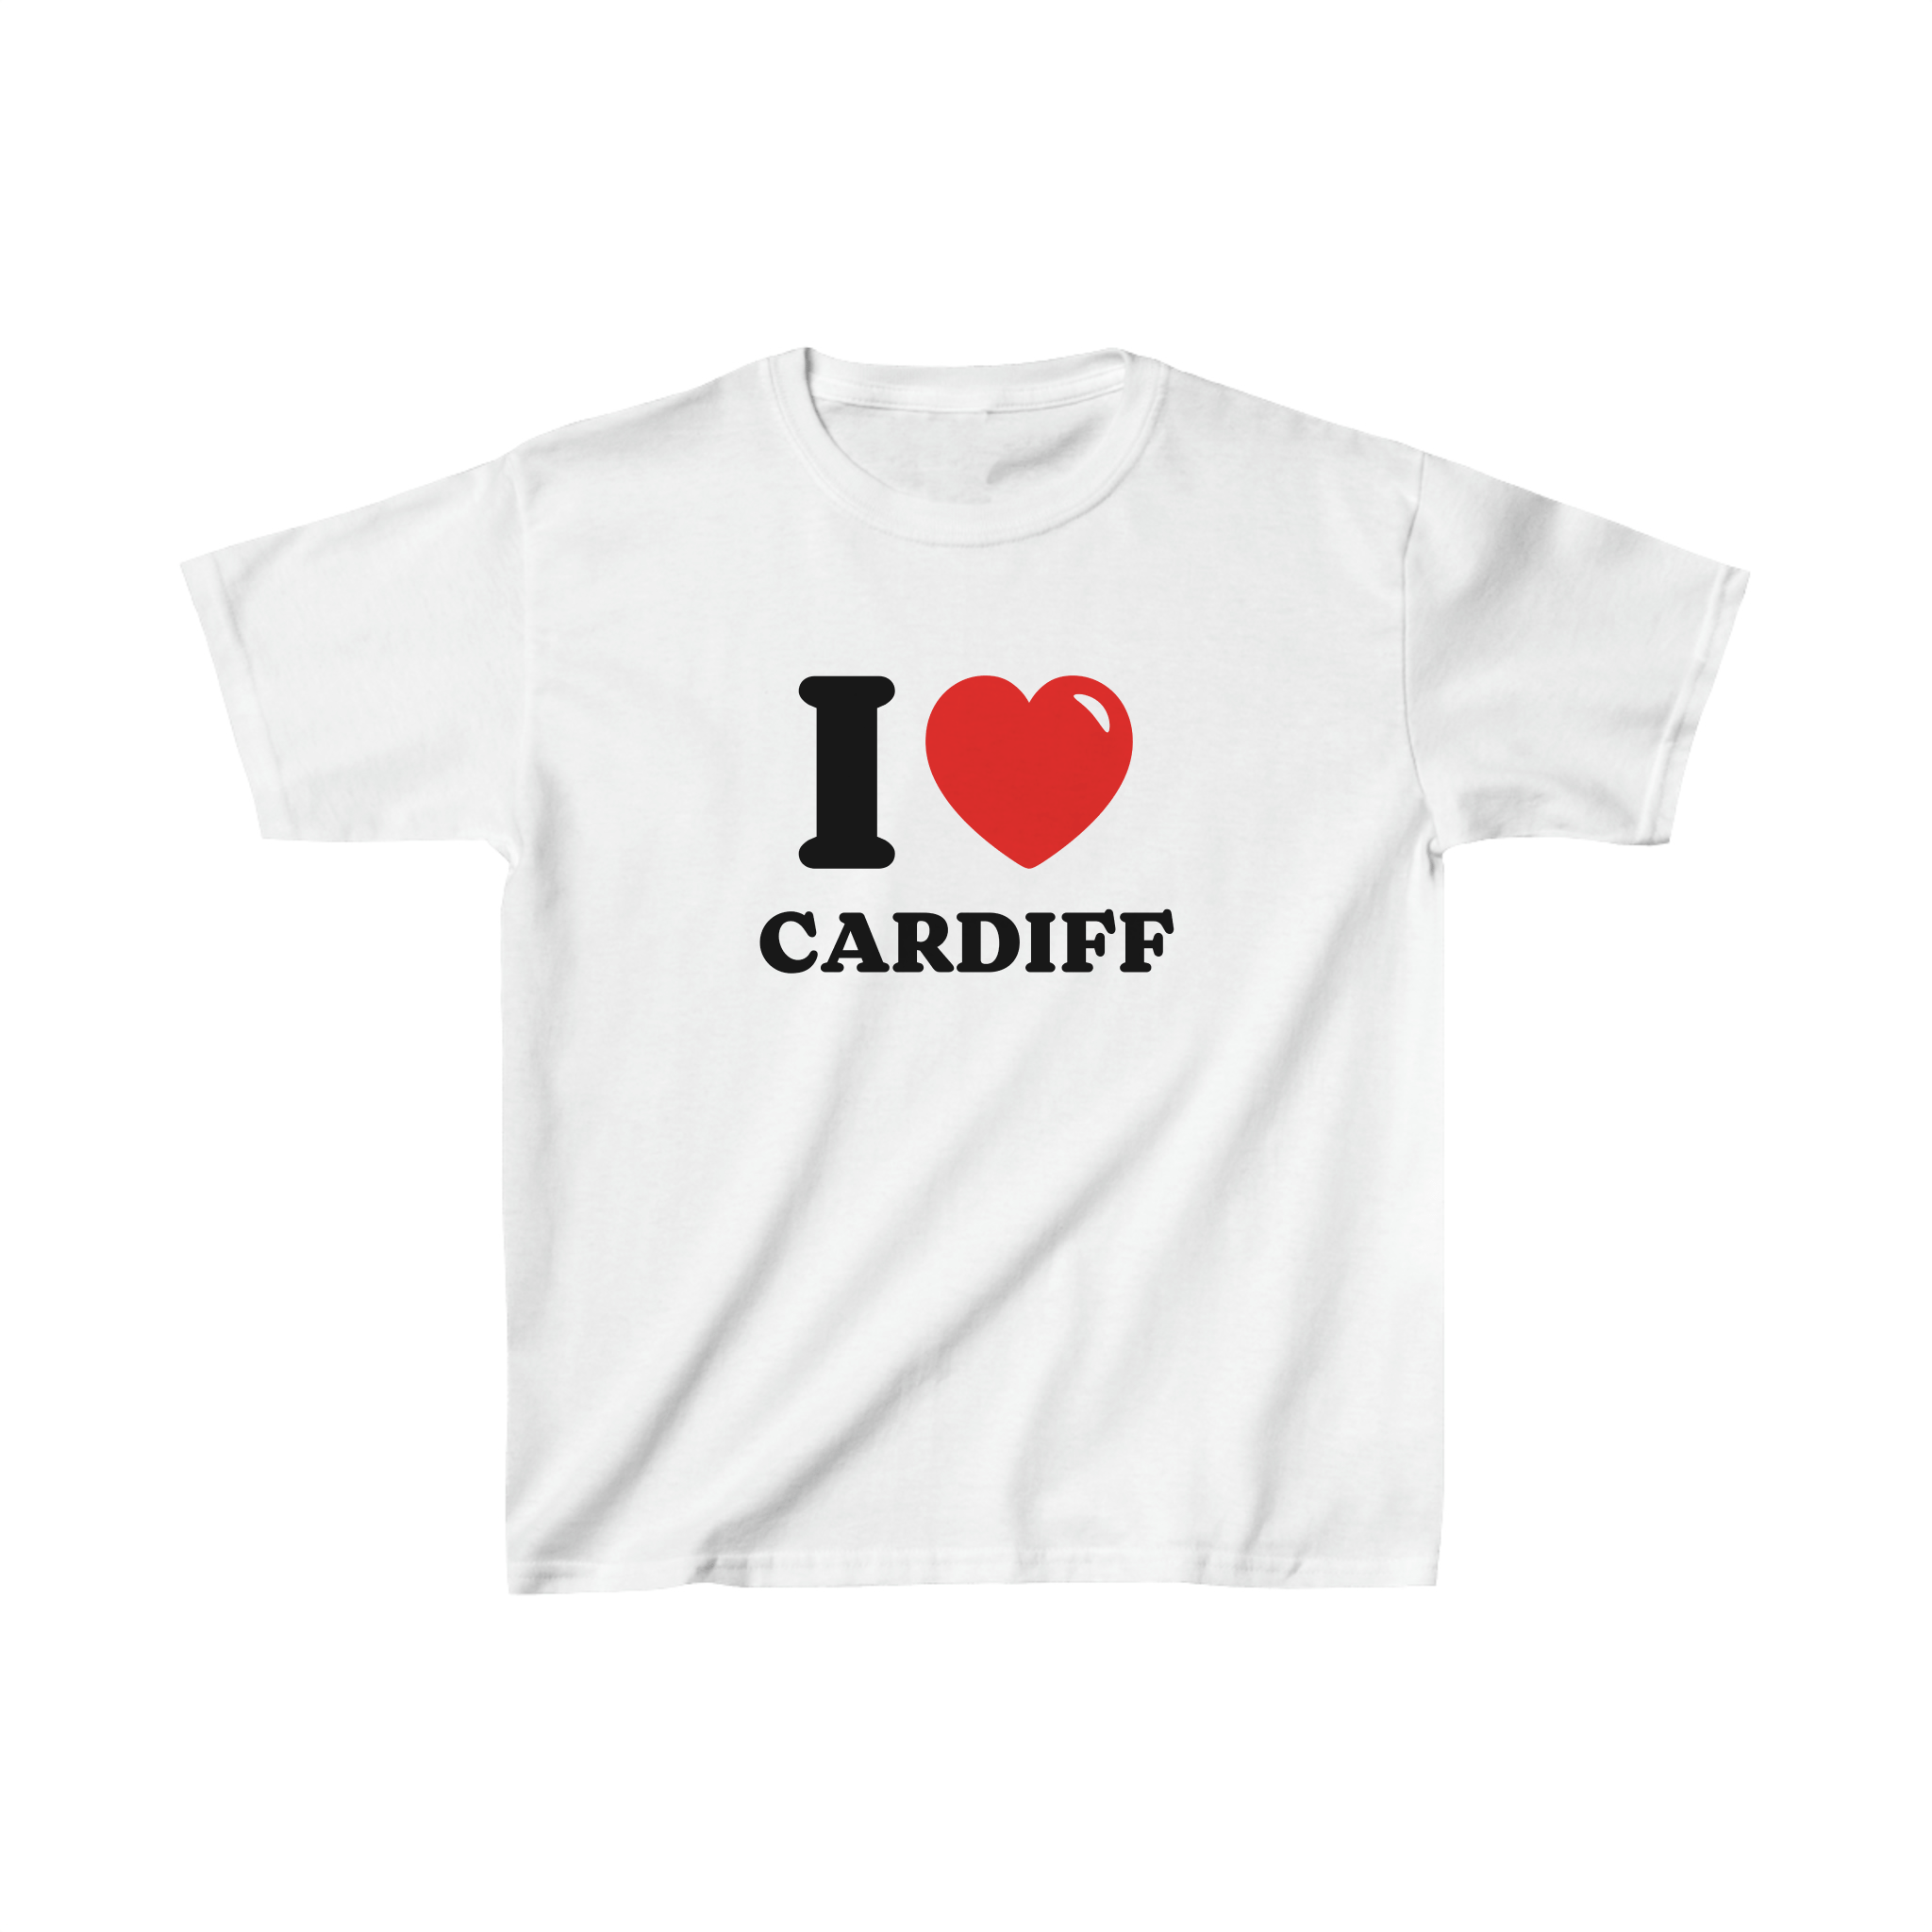 'I love Cardiff' baby tee - In Print We Trust